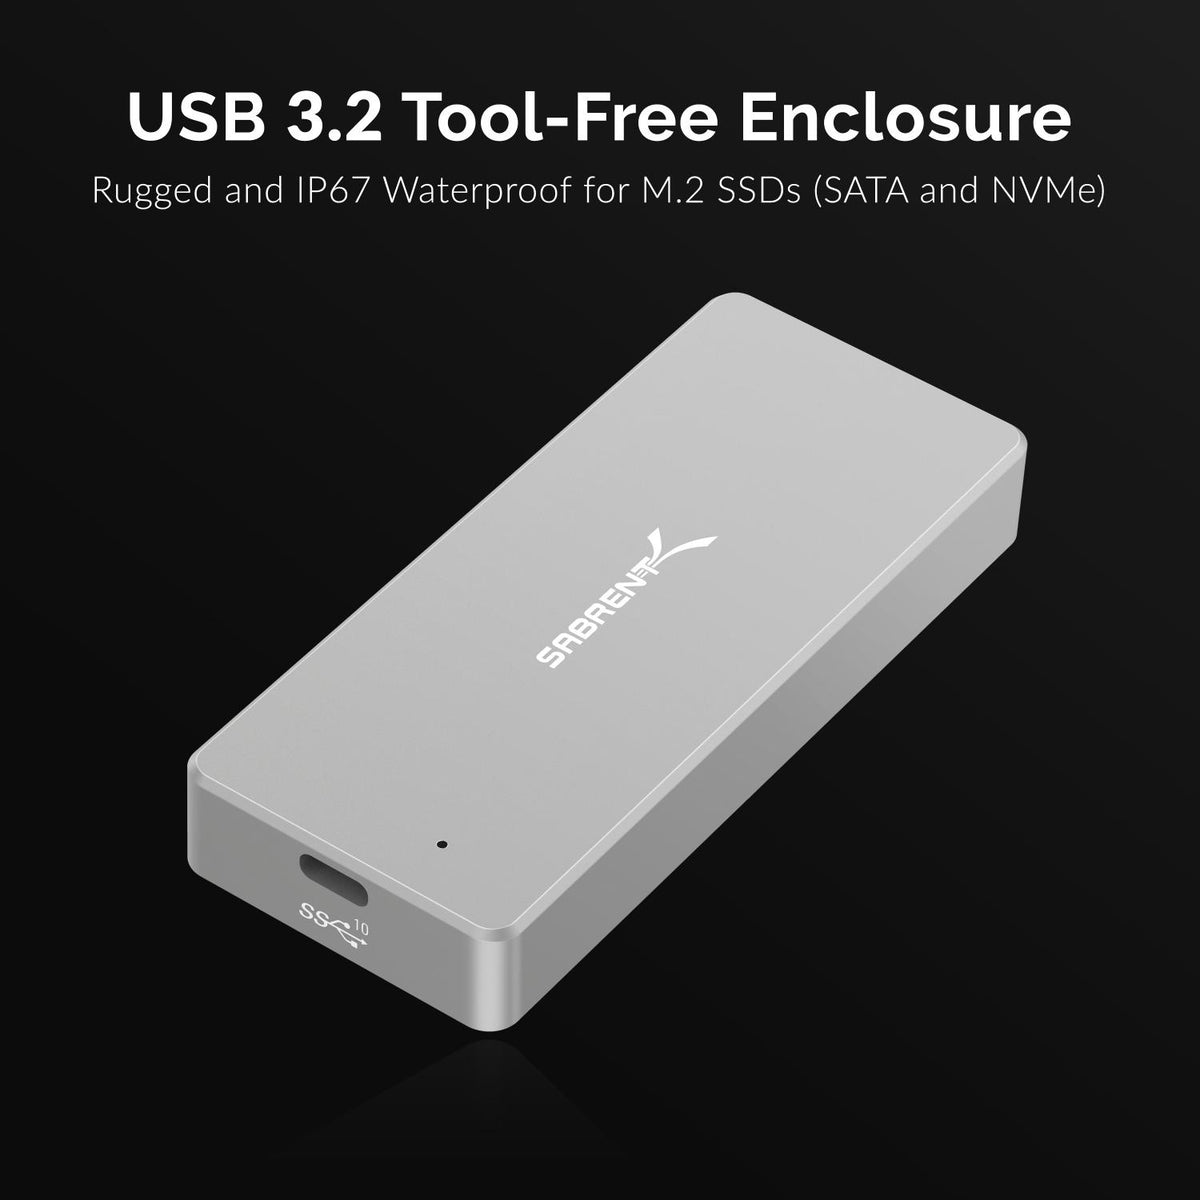 USB 3.2 IP67 Water Resistant Tool-Free SSD Enclosure